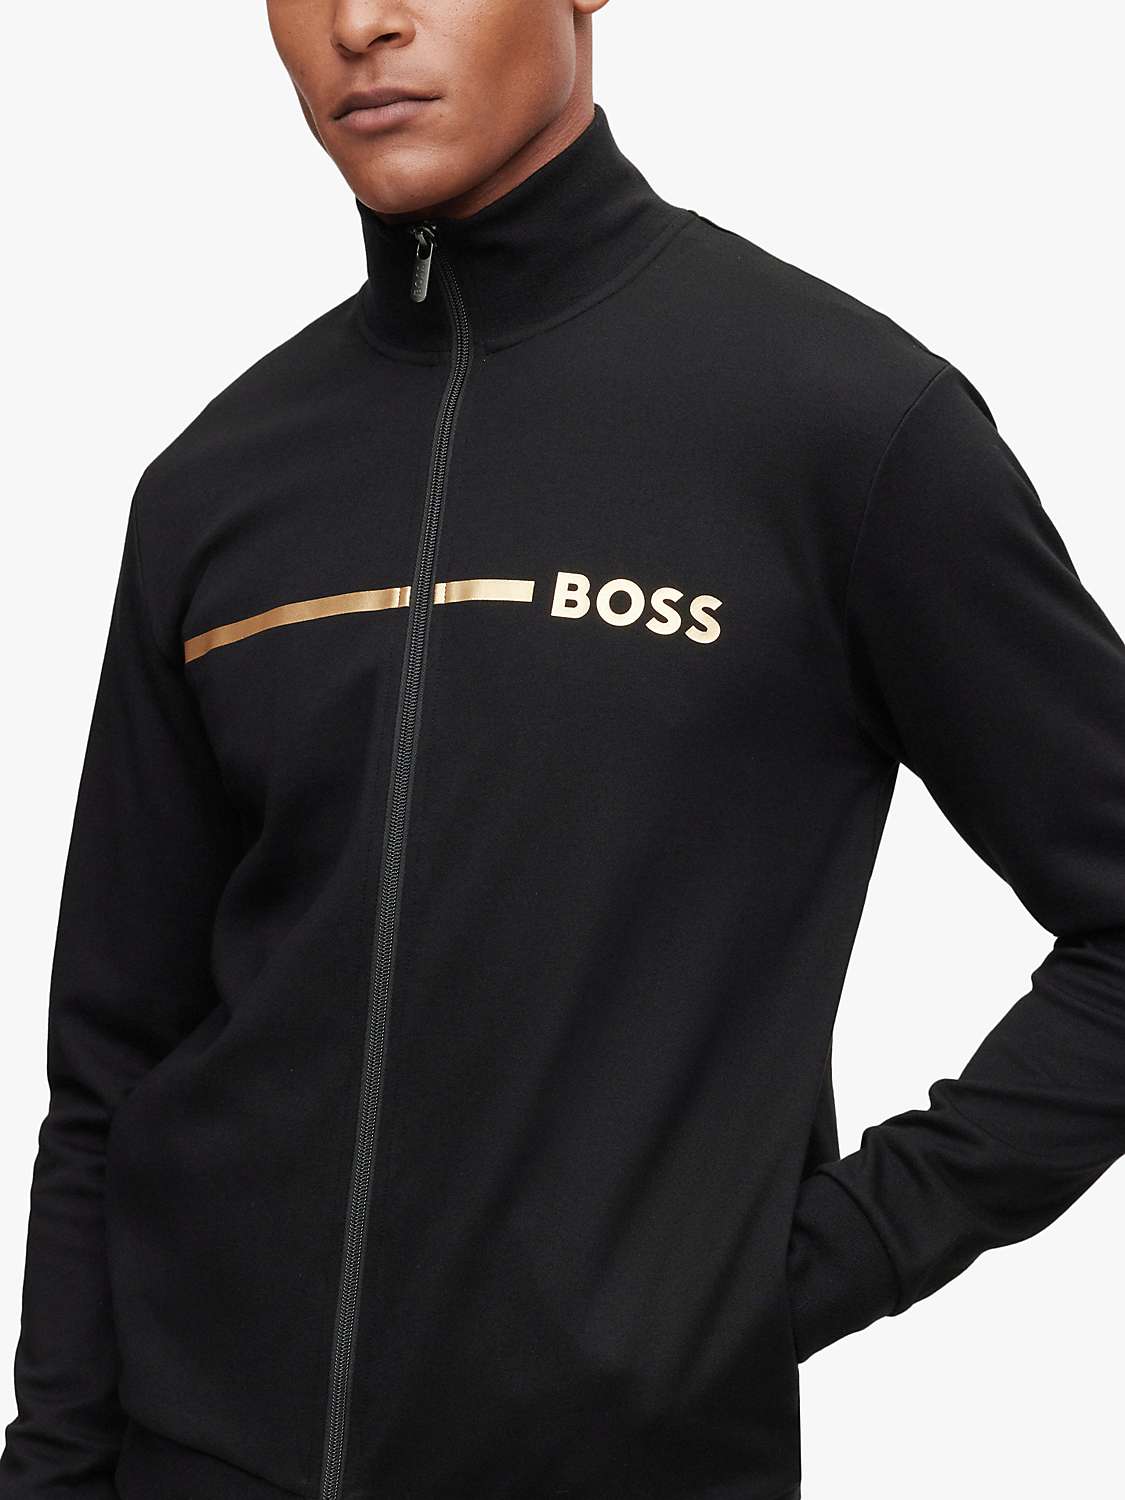 Buy BOSS Zipped Tracksuit Jacket, Black Online at johnlewis.com